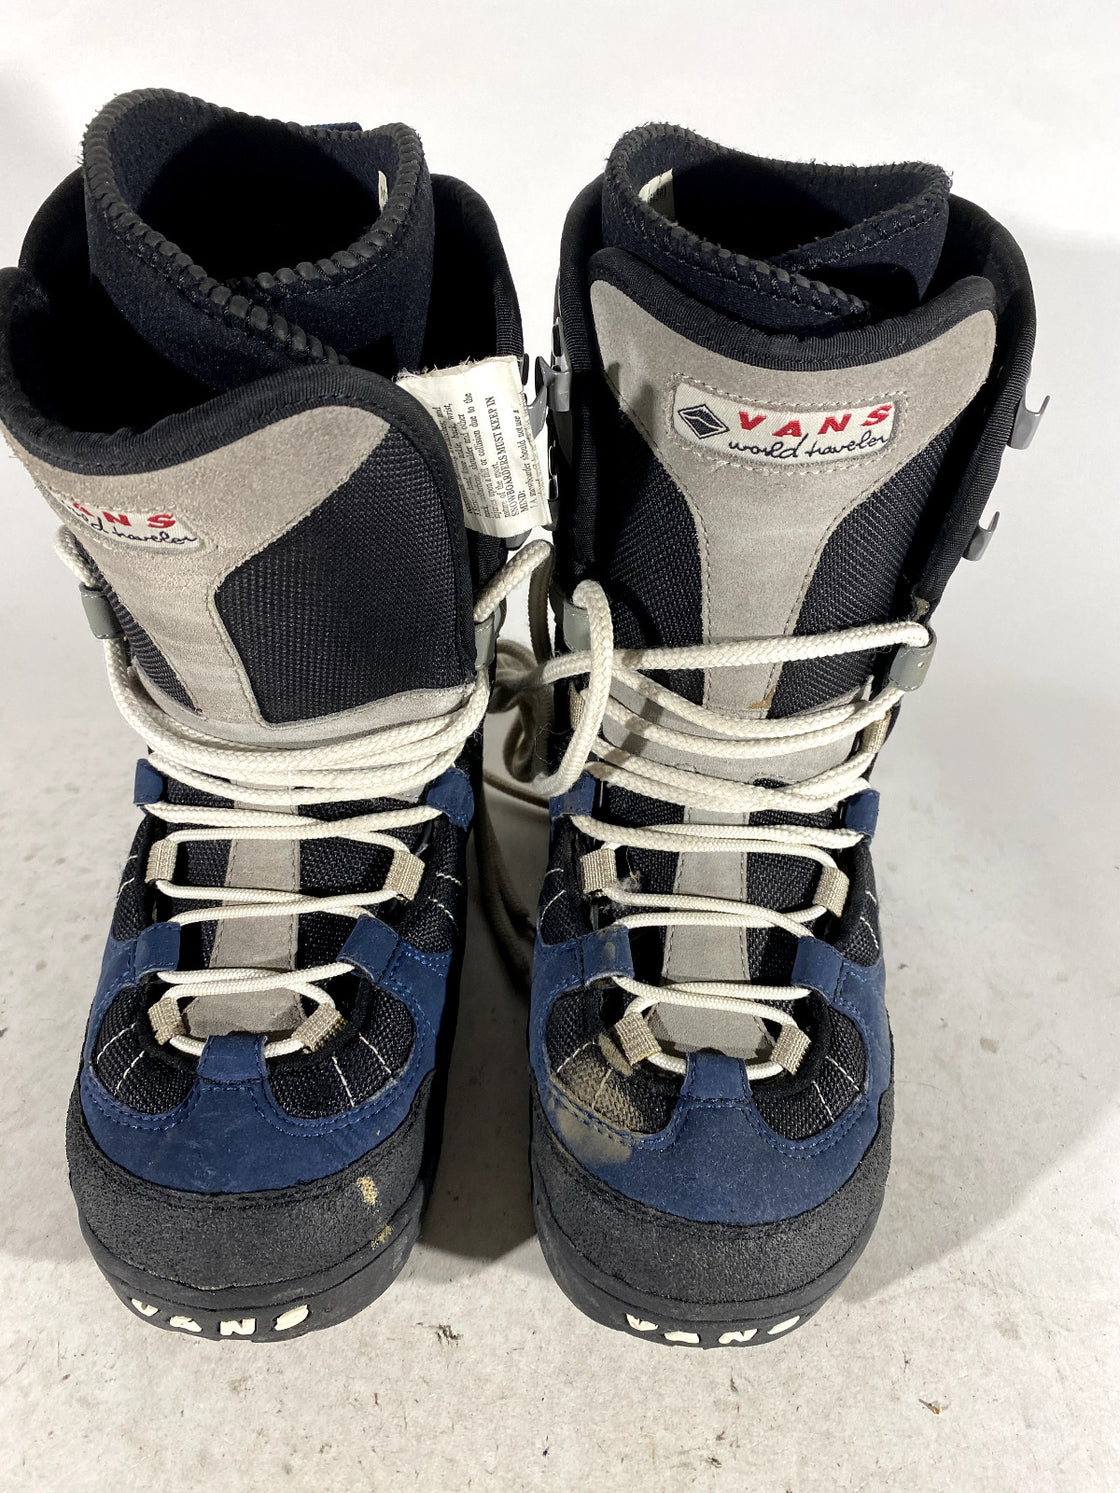 VANS Snowboard Boots Size EU37 US5 UK4 Unisex Mondo 230 mm